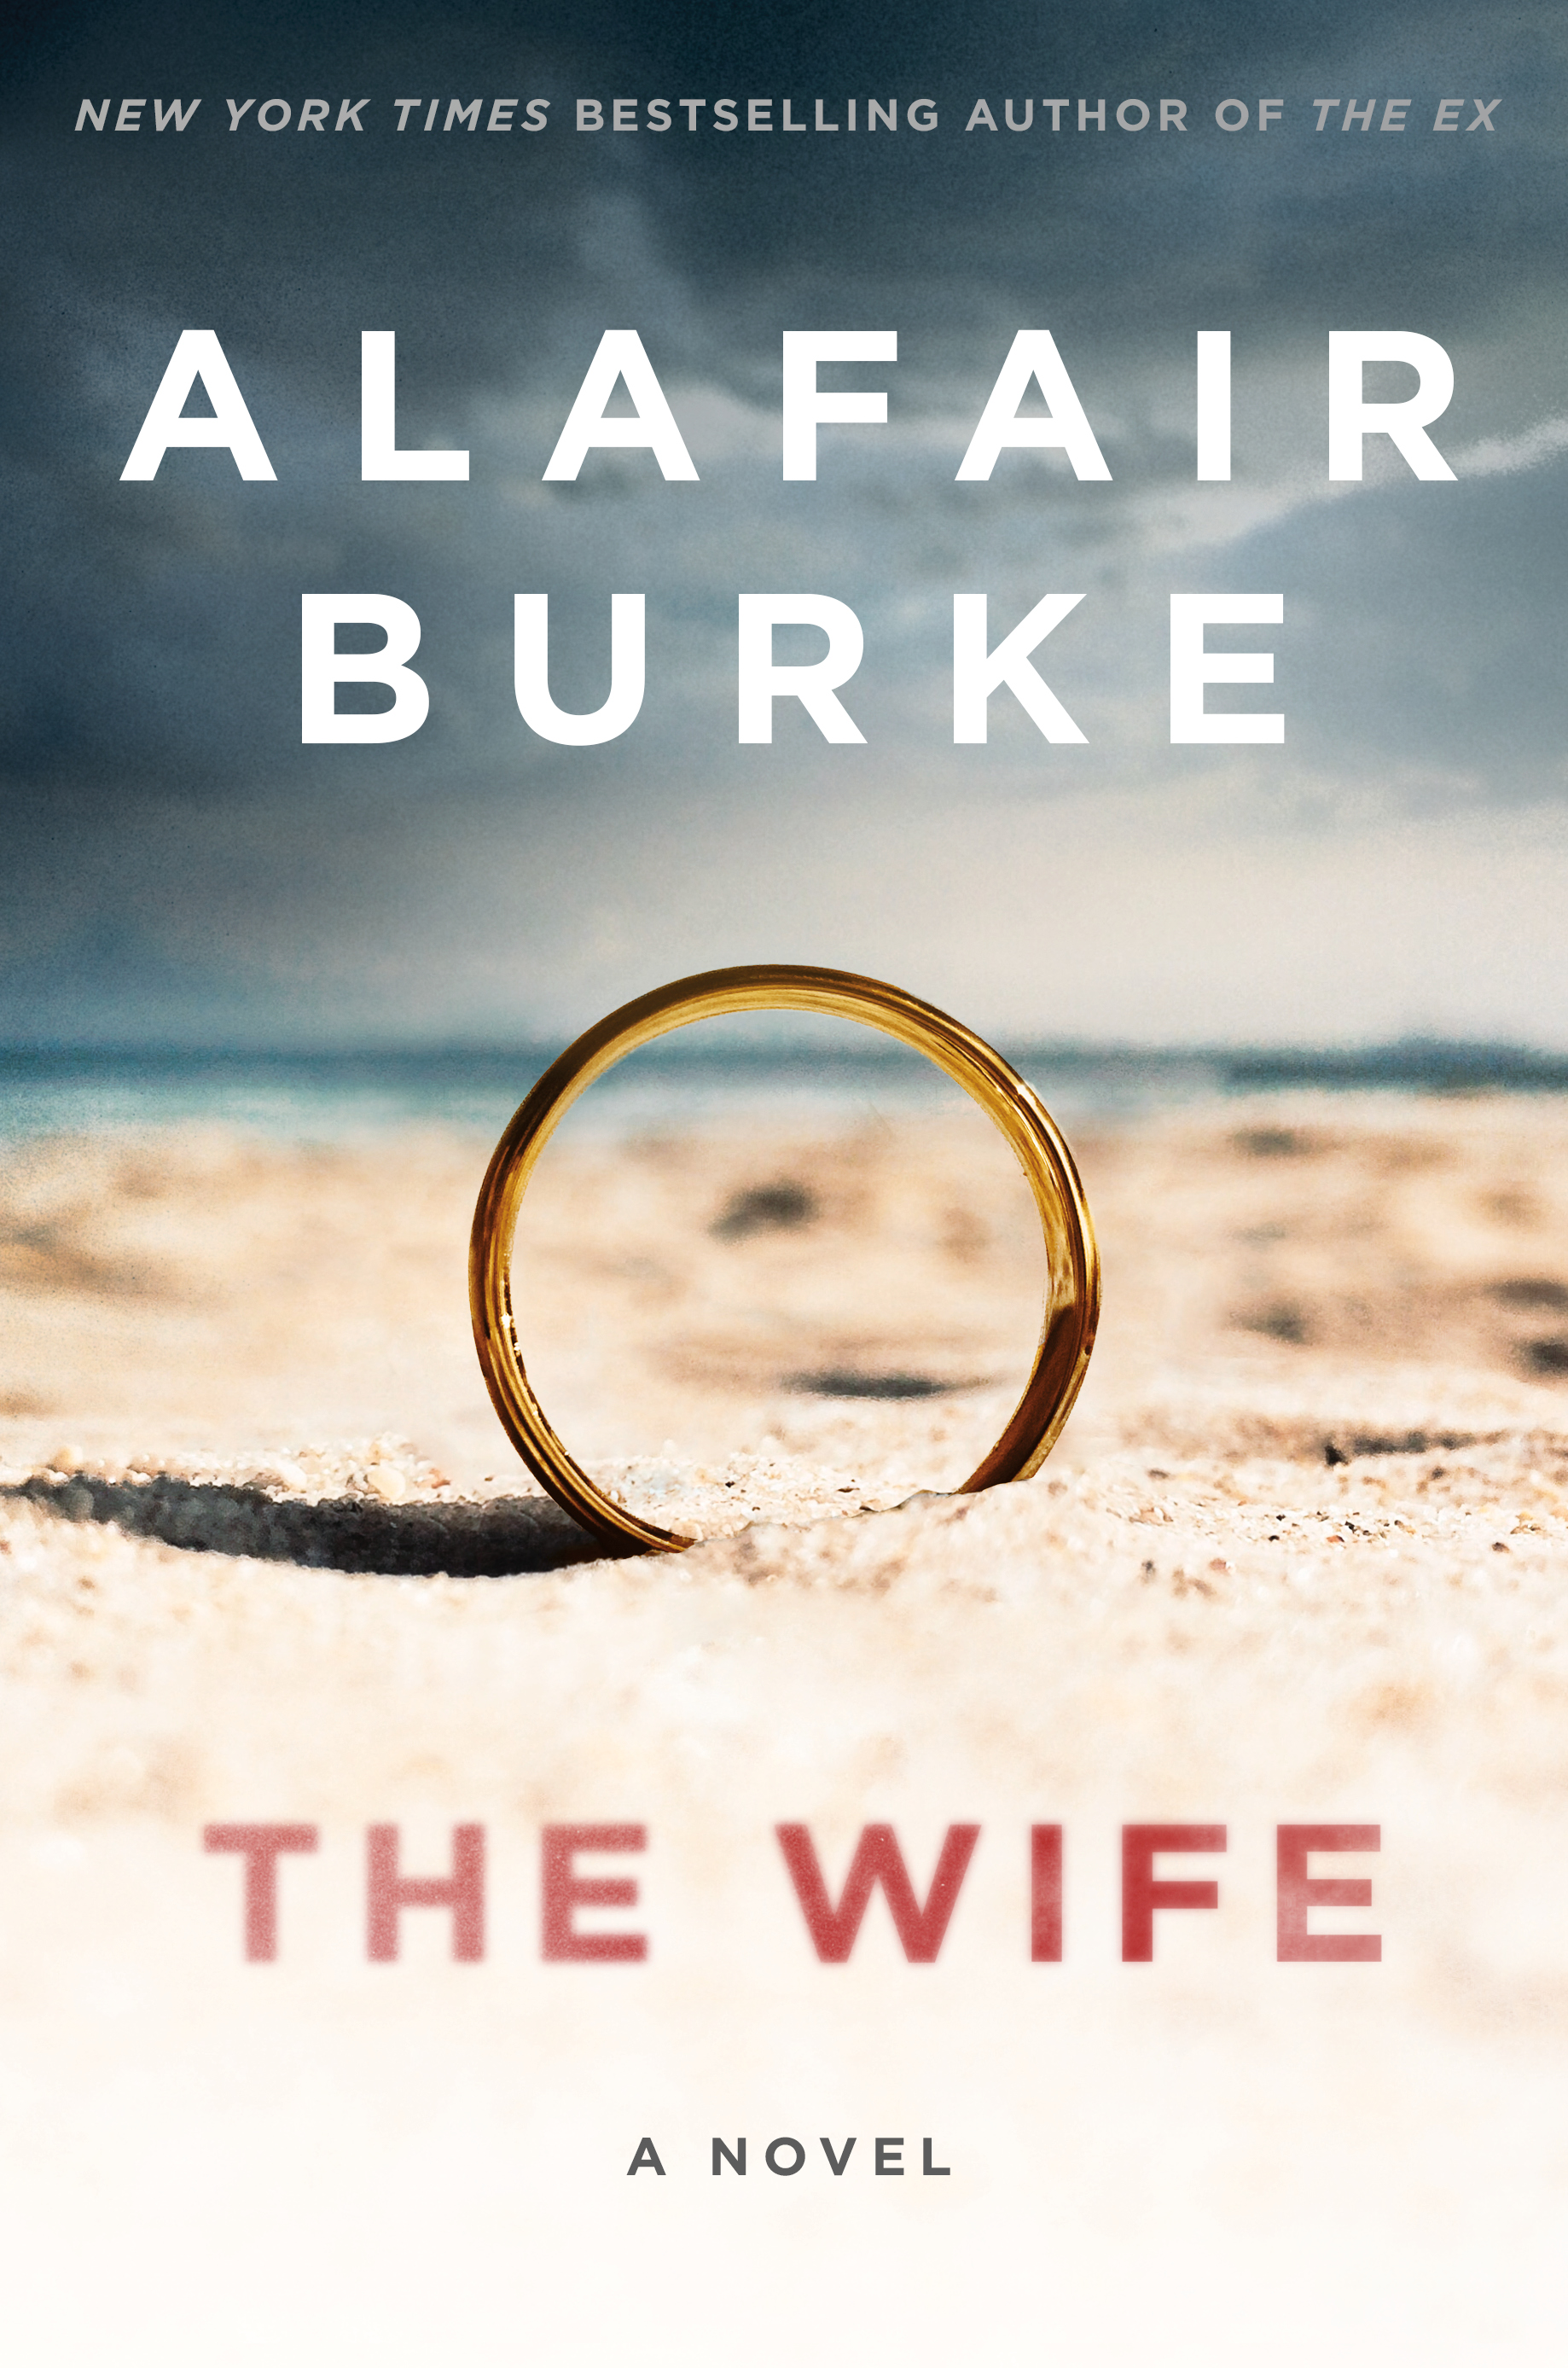 Novel wife. Alafair Burke the wife. The novel. Alafair Burke. Burke a. "the better sister".